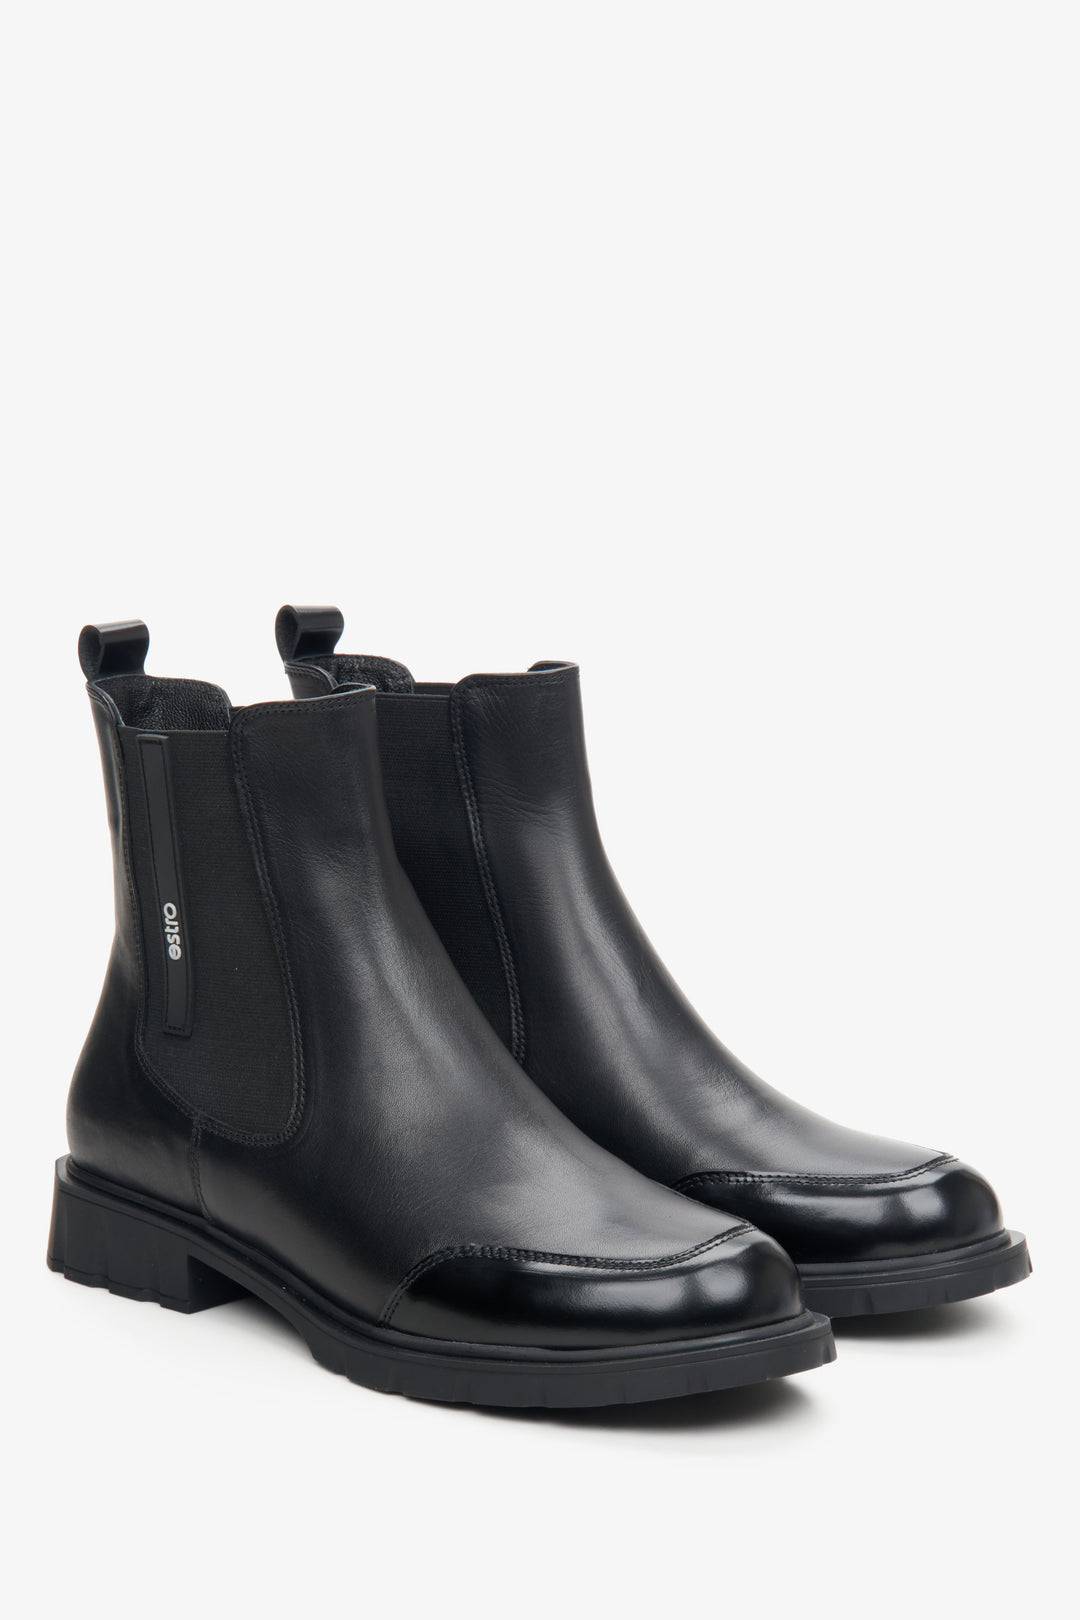 Estro women's  black leather Chelsea boots.